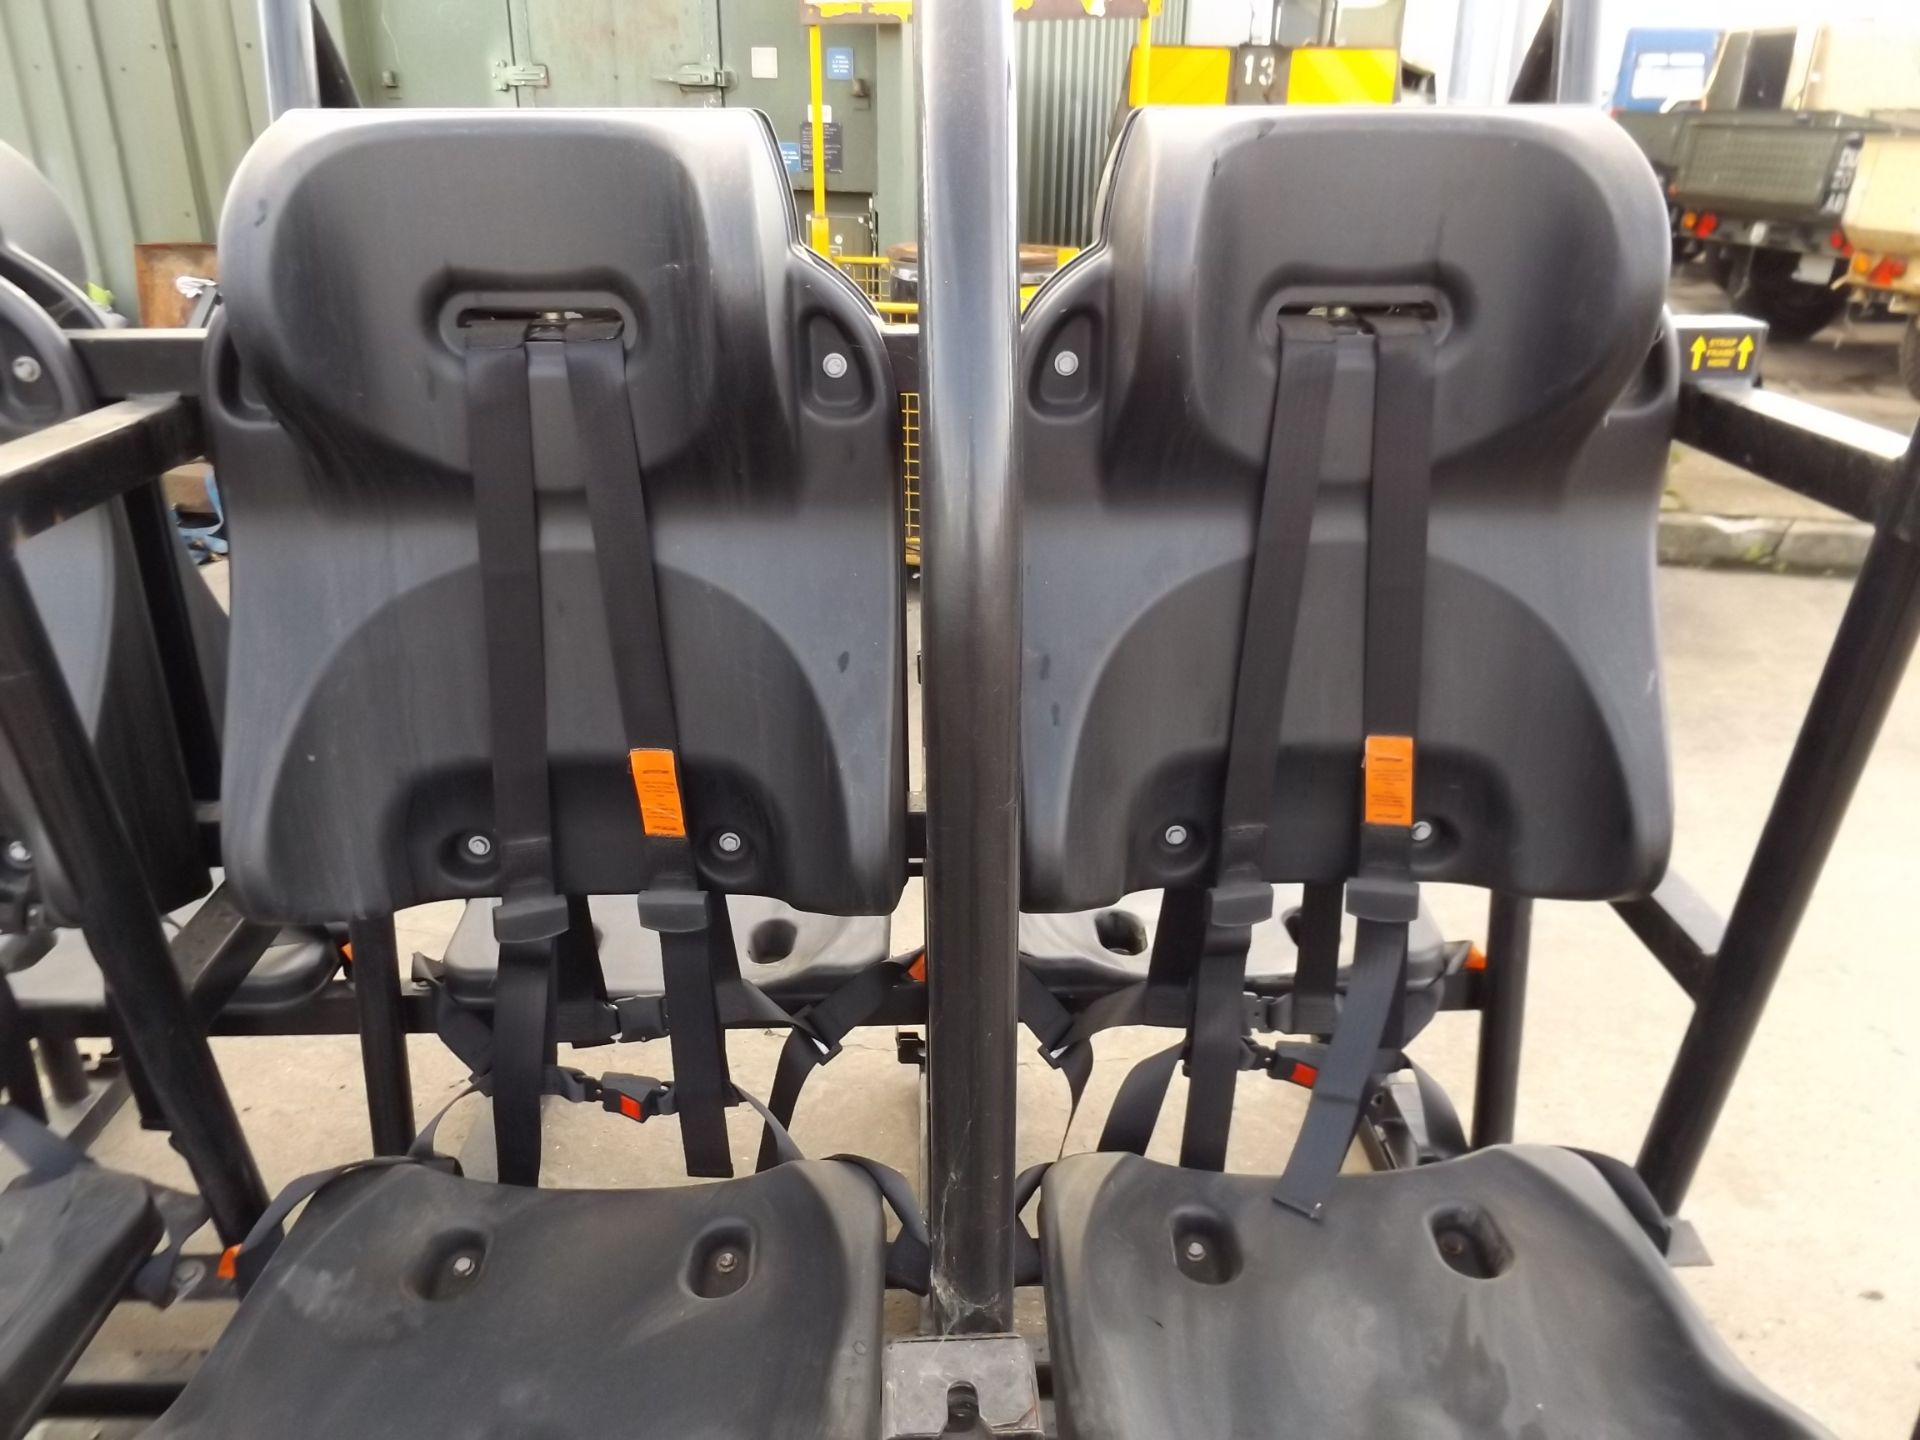 Roush Technologies 8 Man GSV Enhanced Seating Kit suitable for Leyland Dafs, Bedfords etc - Image 5 of 6